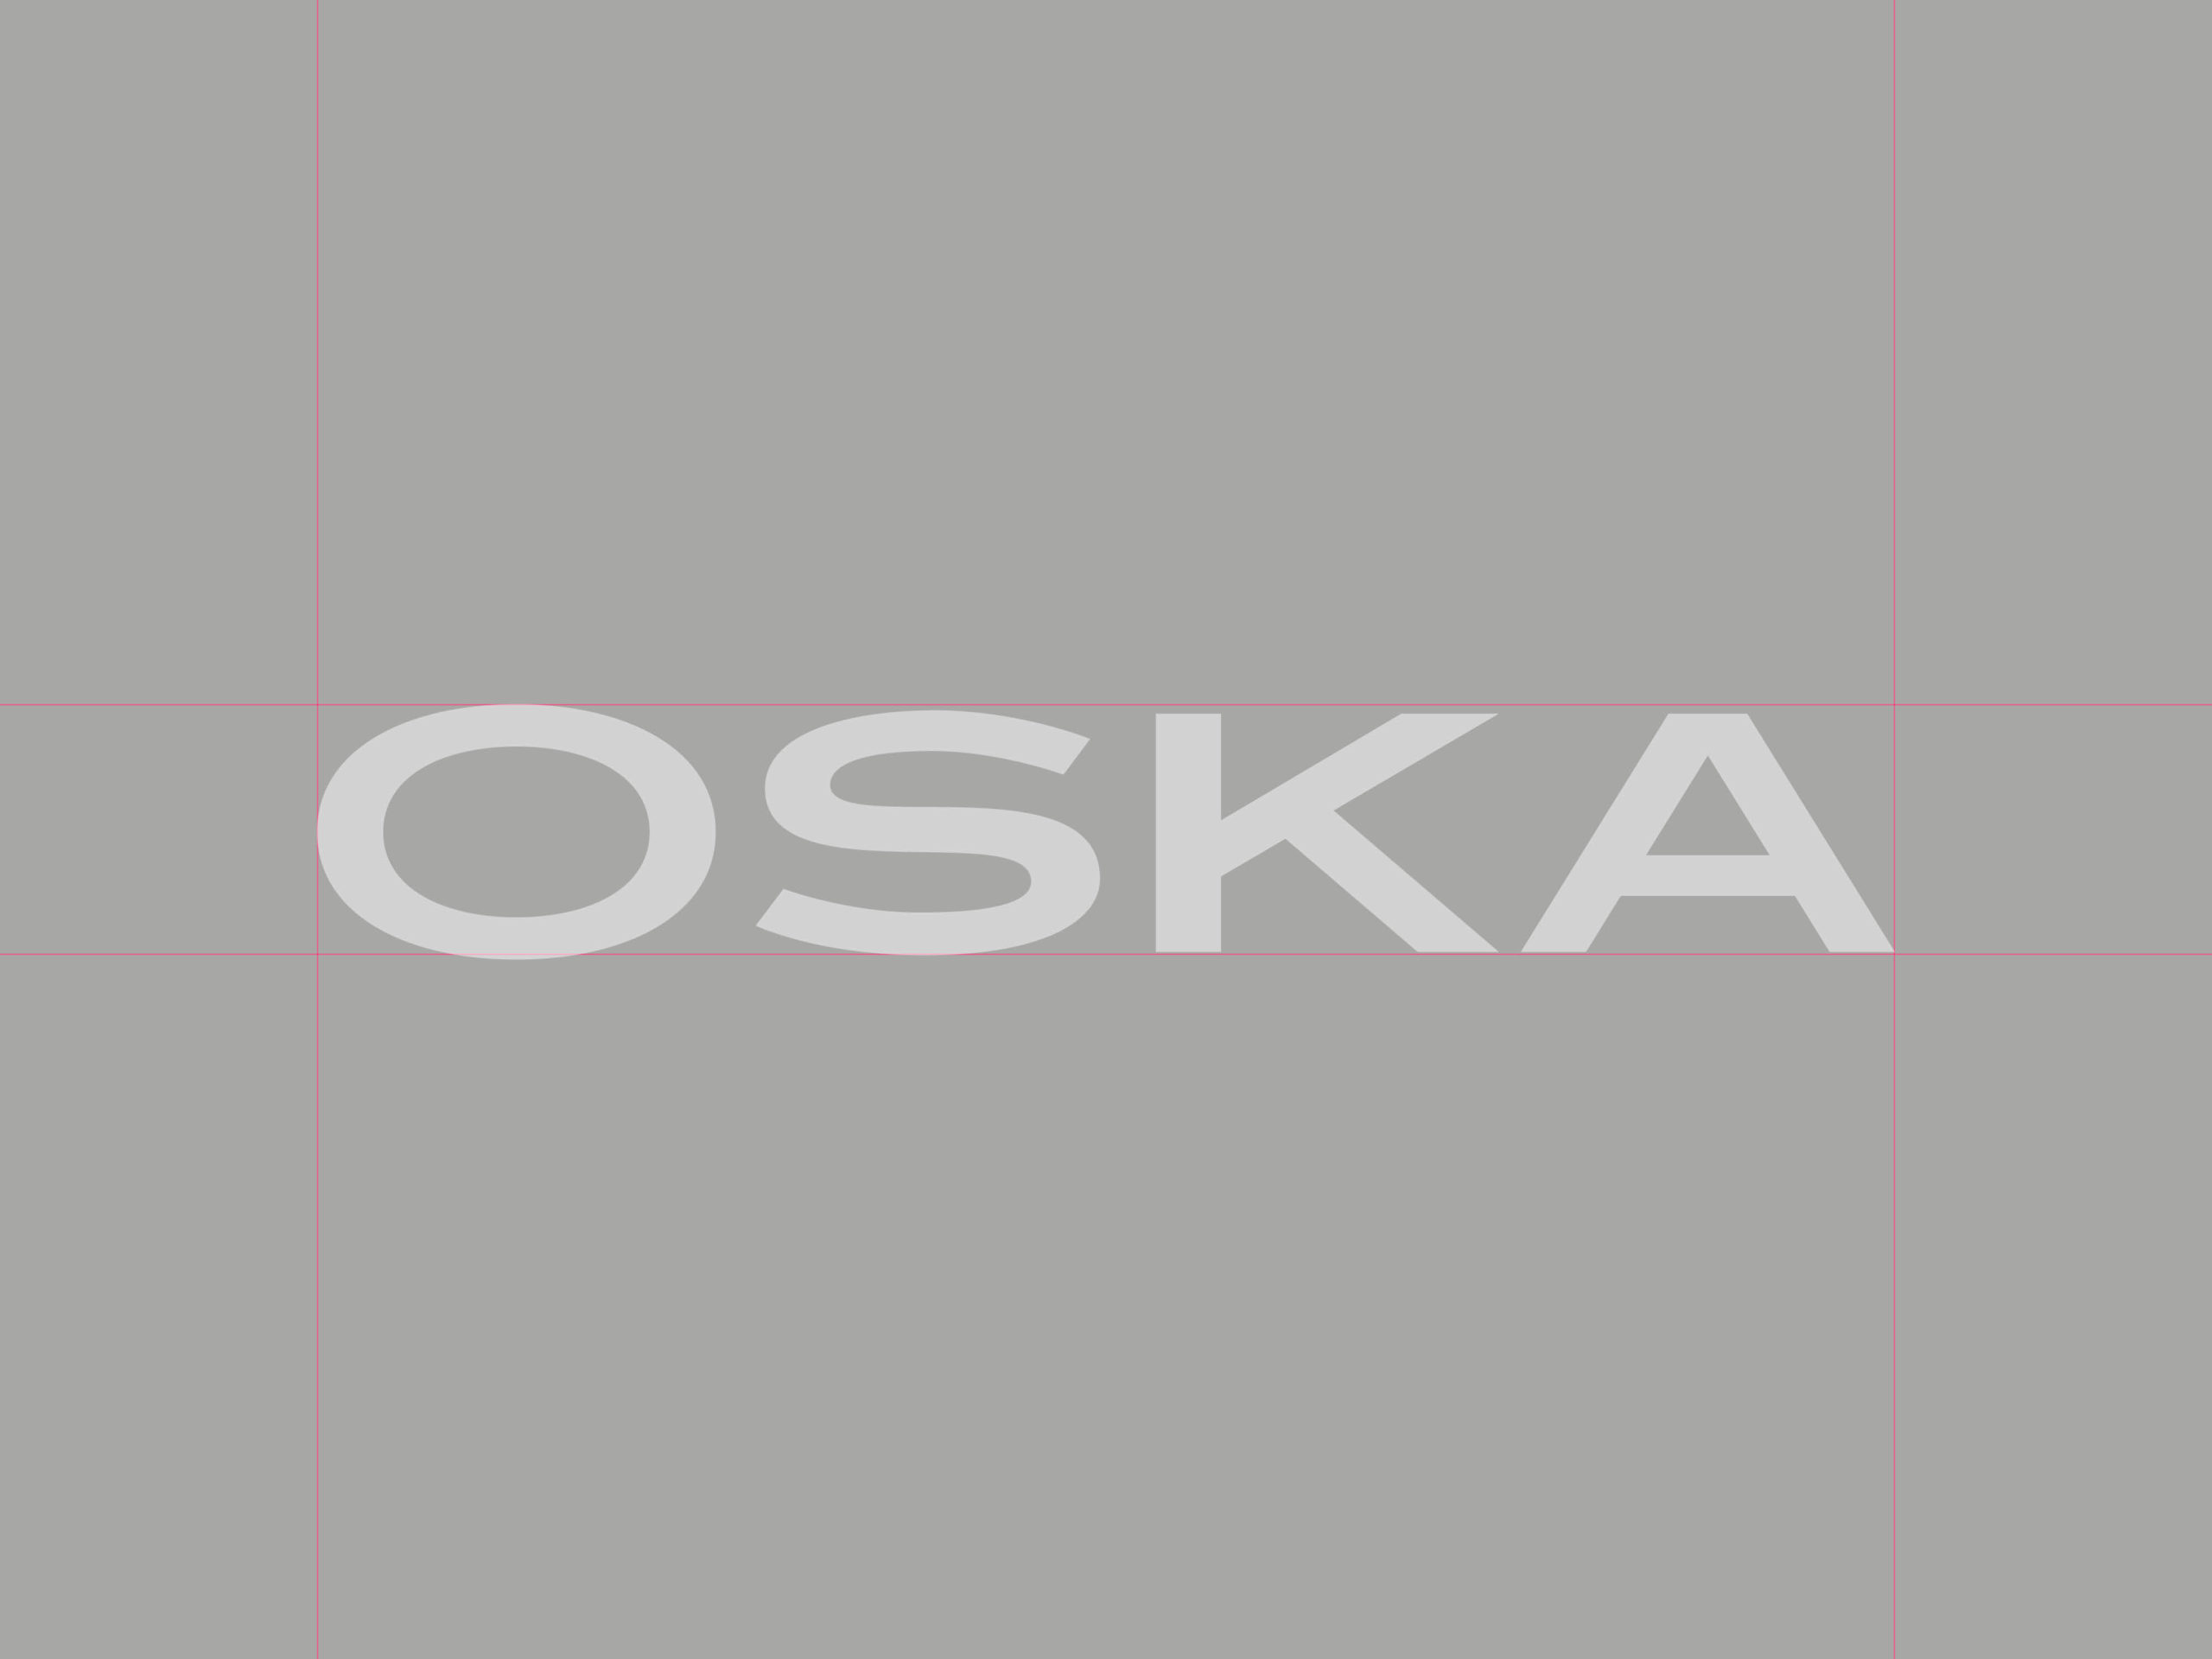 OSKA_16